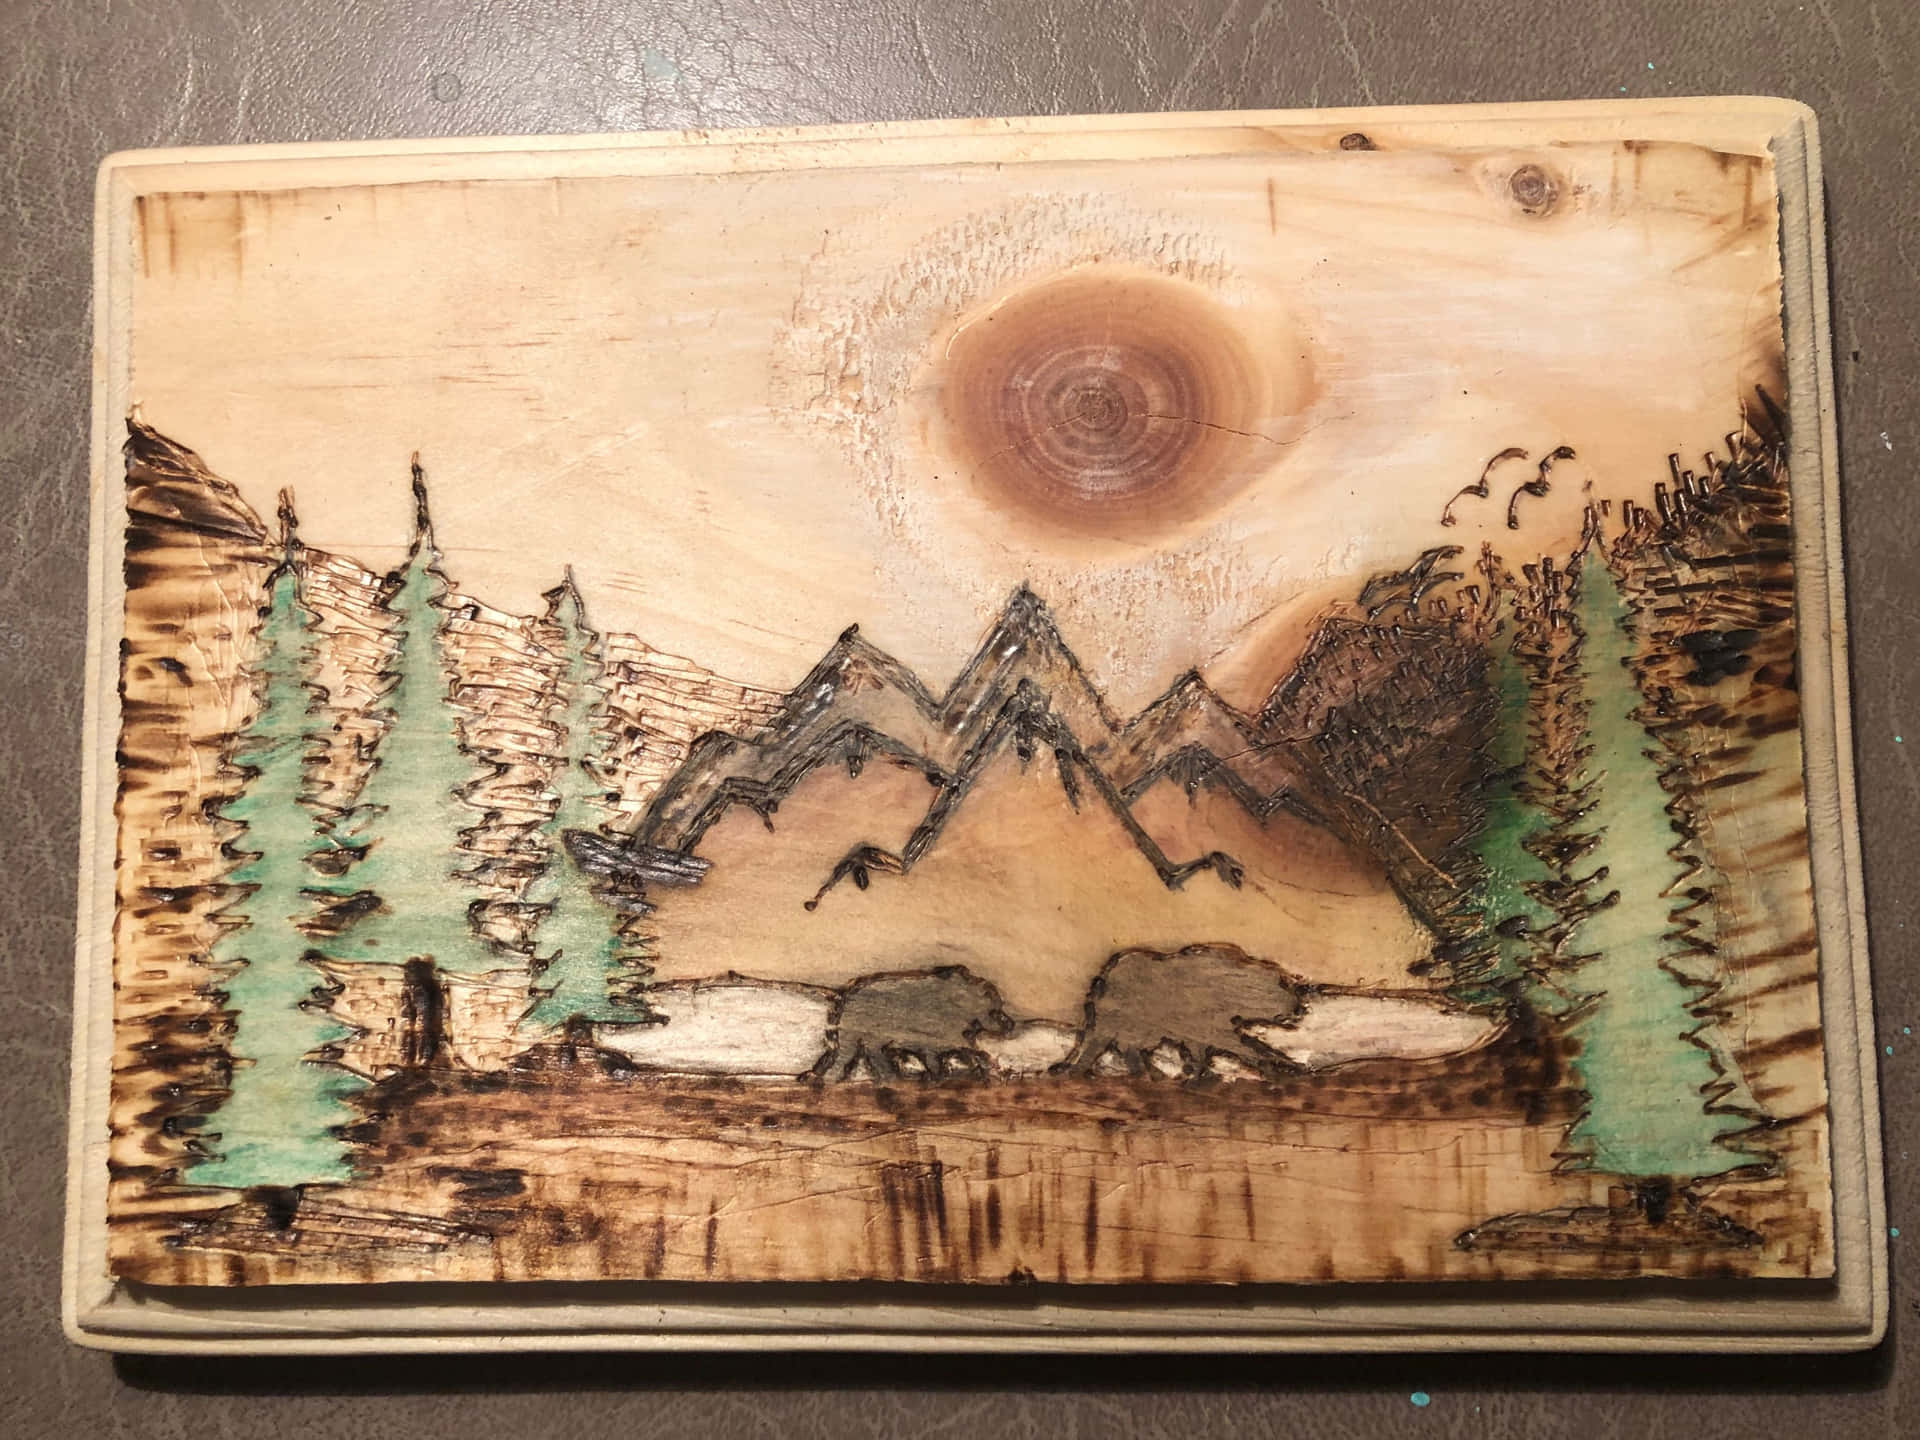 Wood Burning & Carving